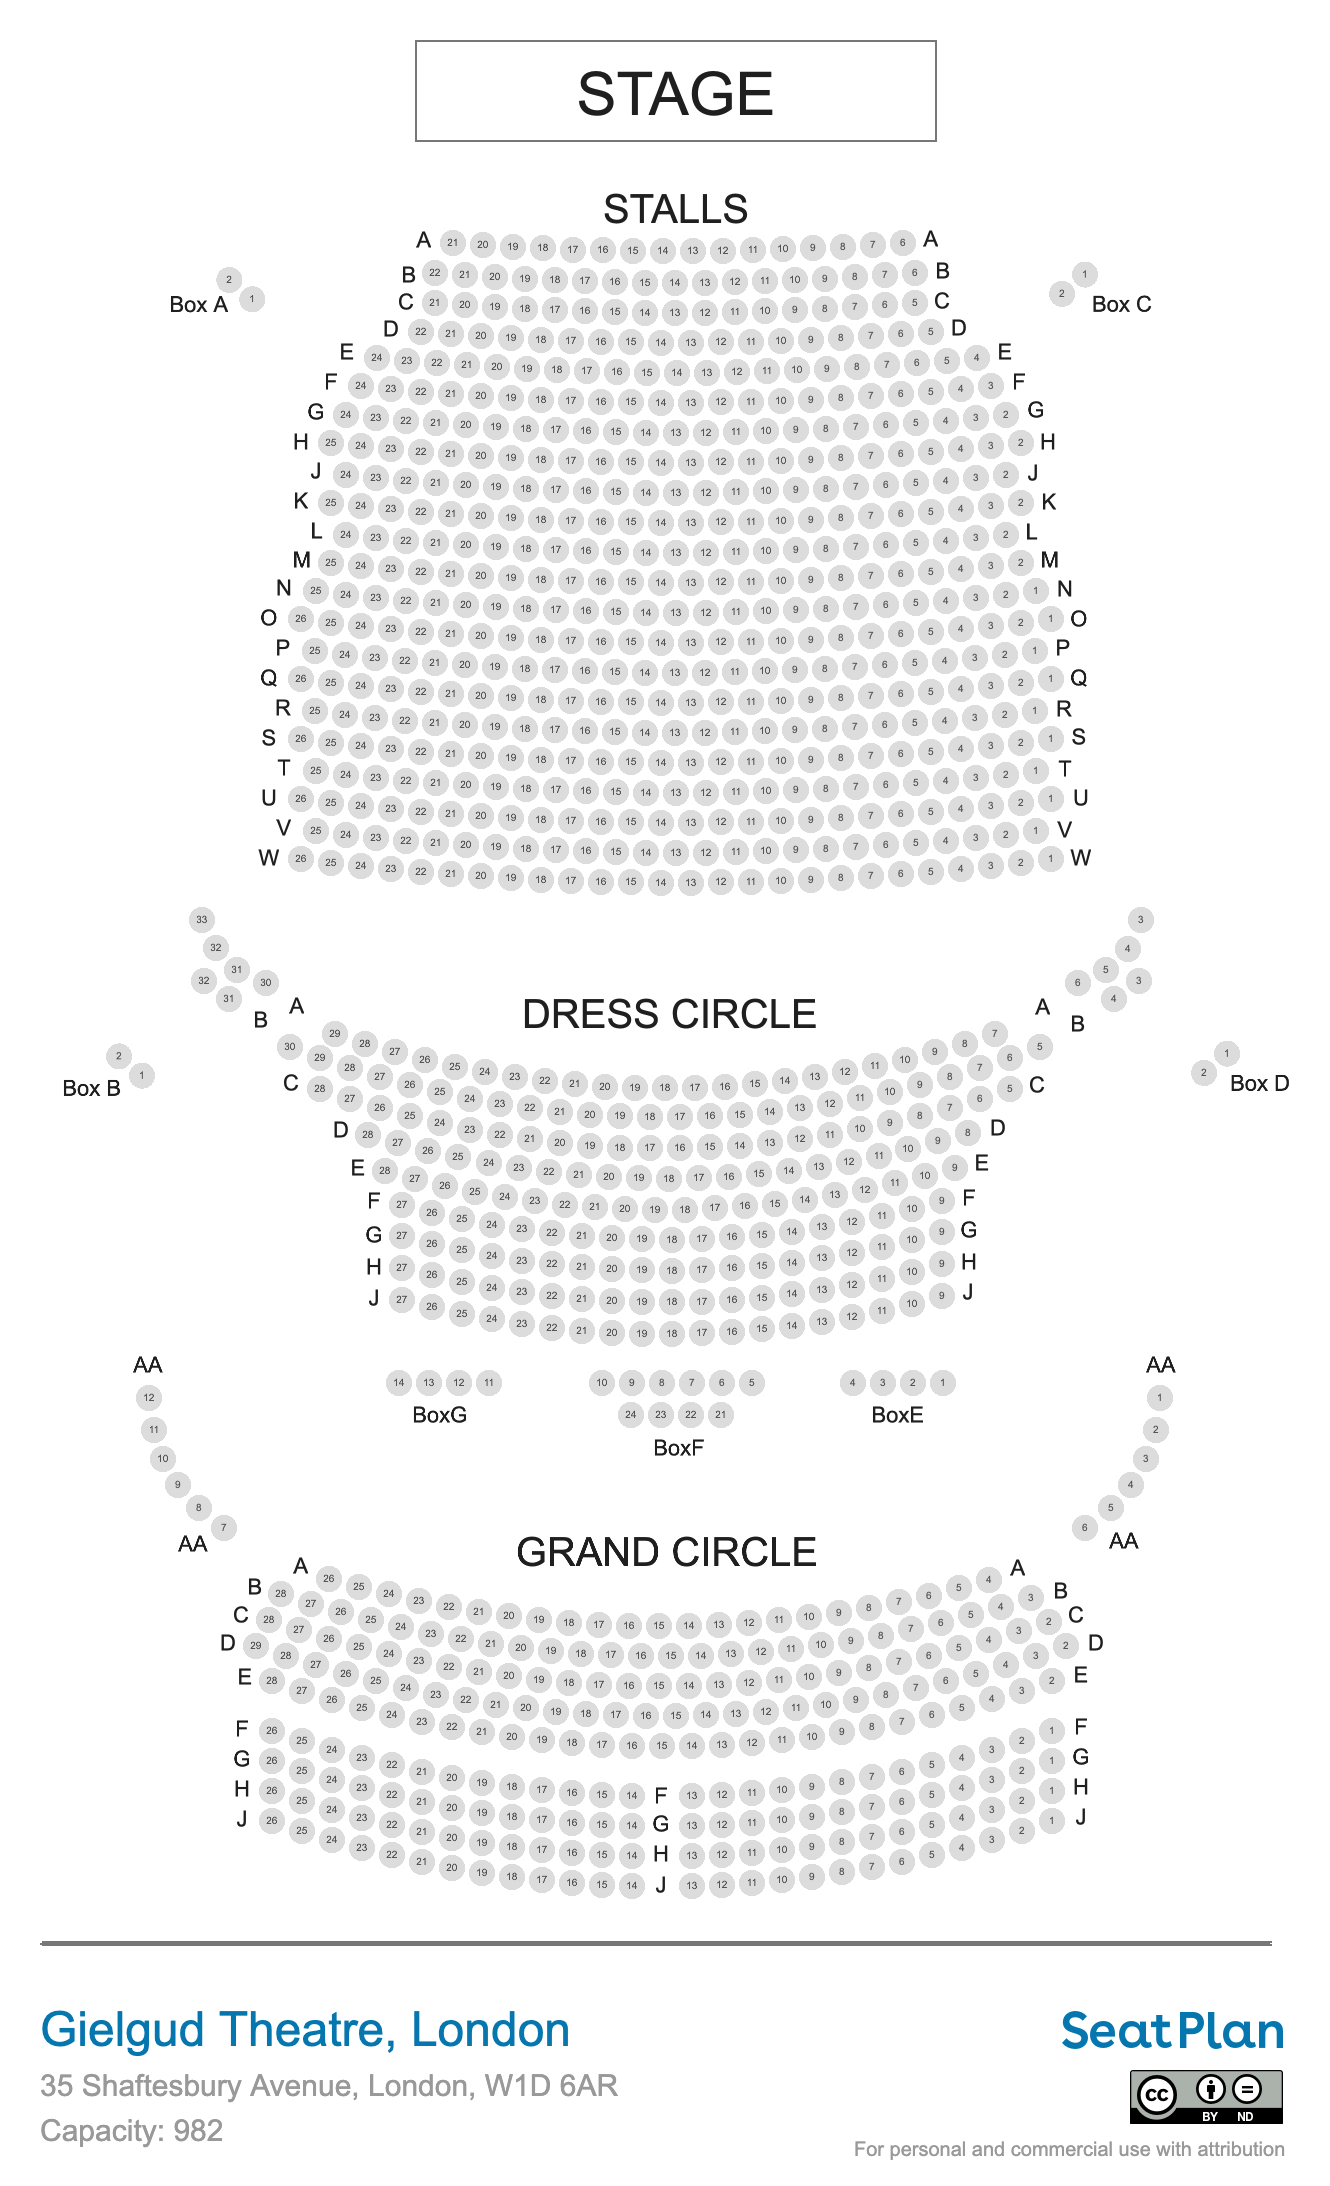 Gielgud Theatre seating plan